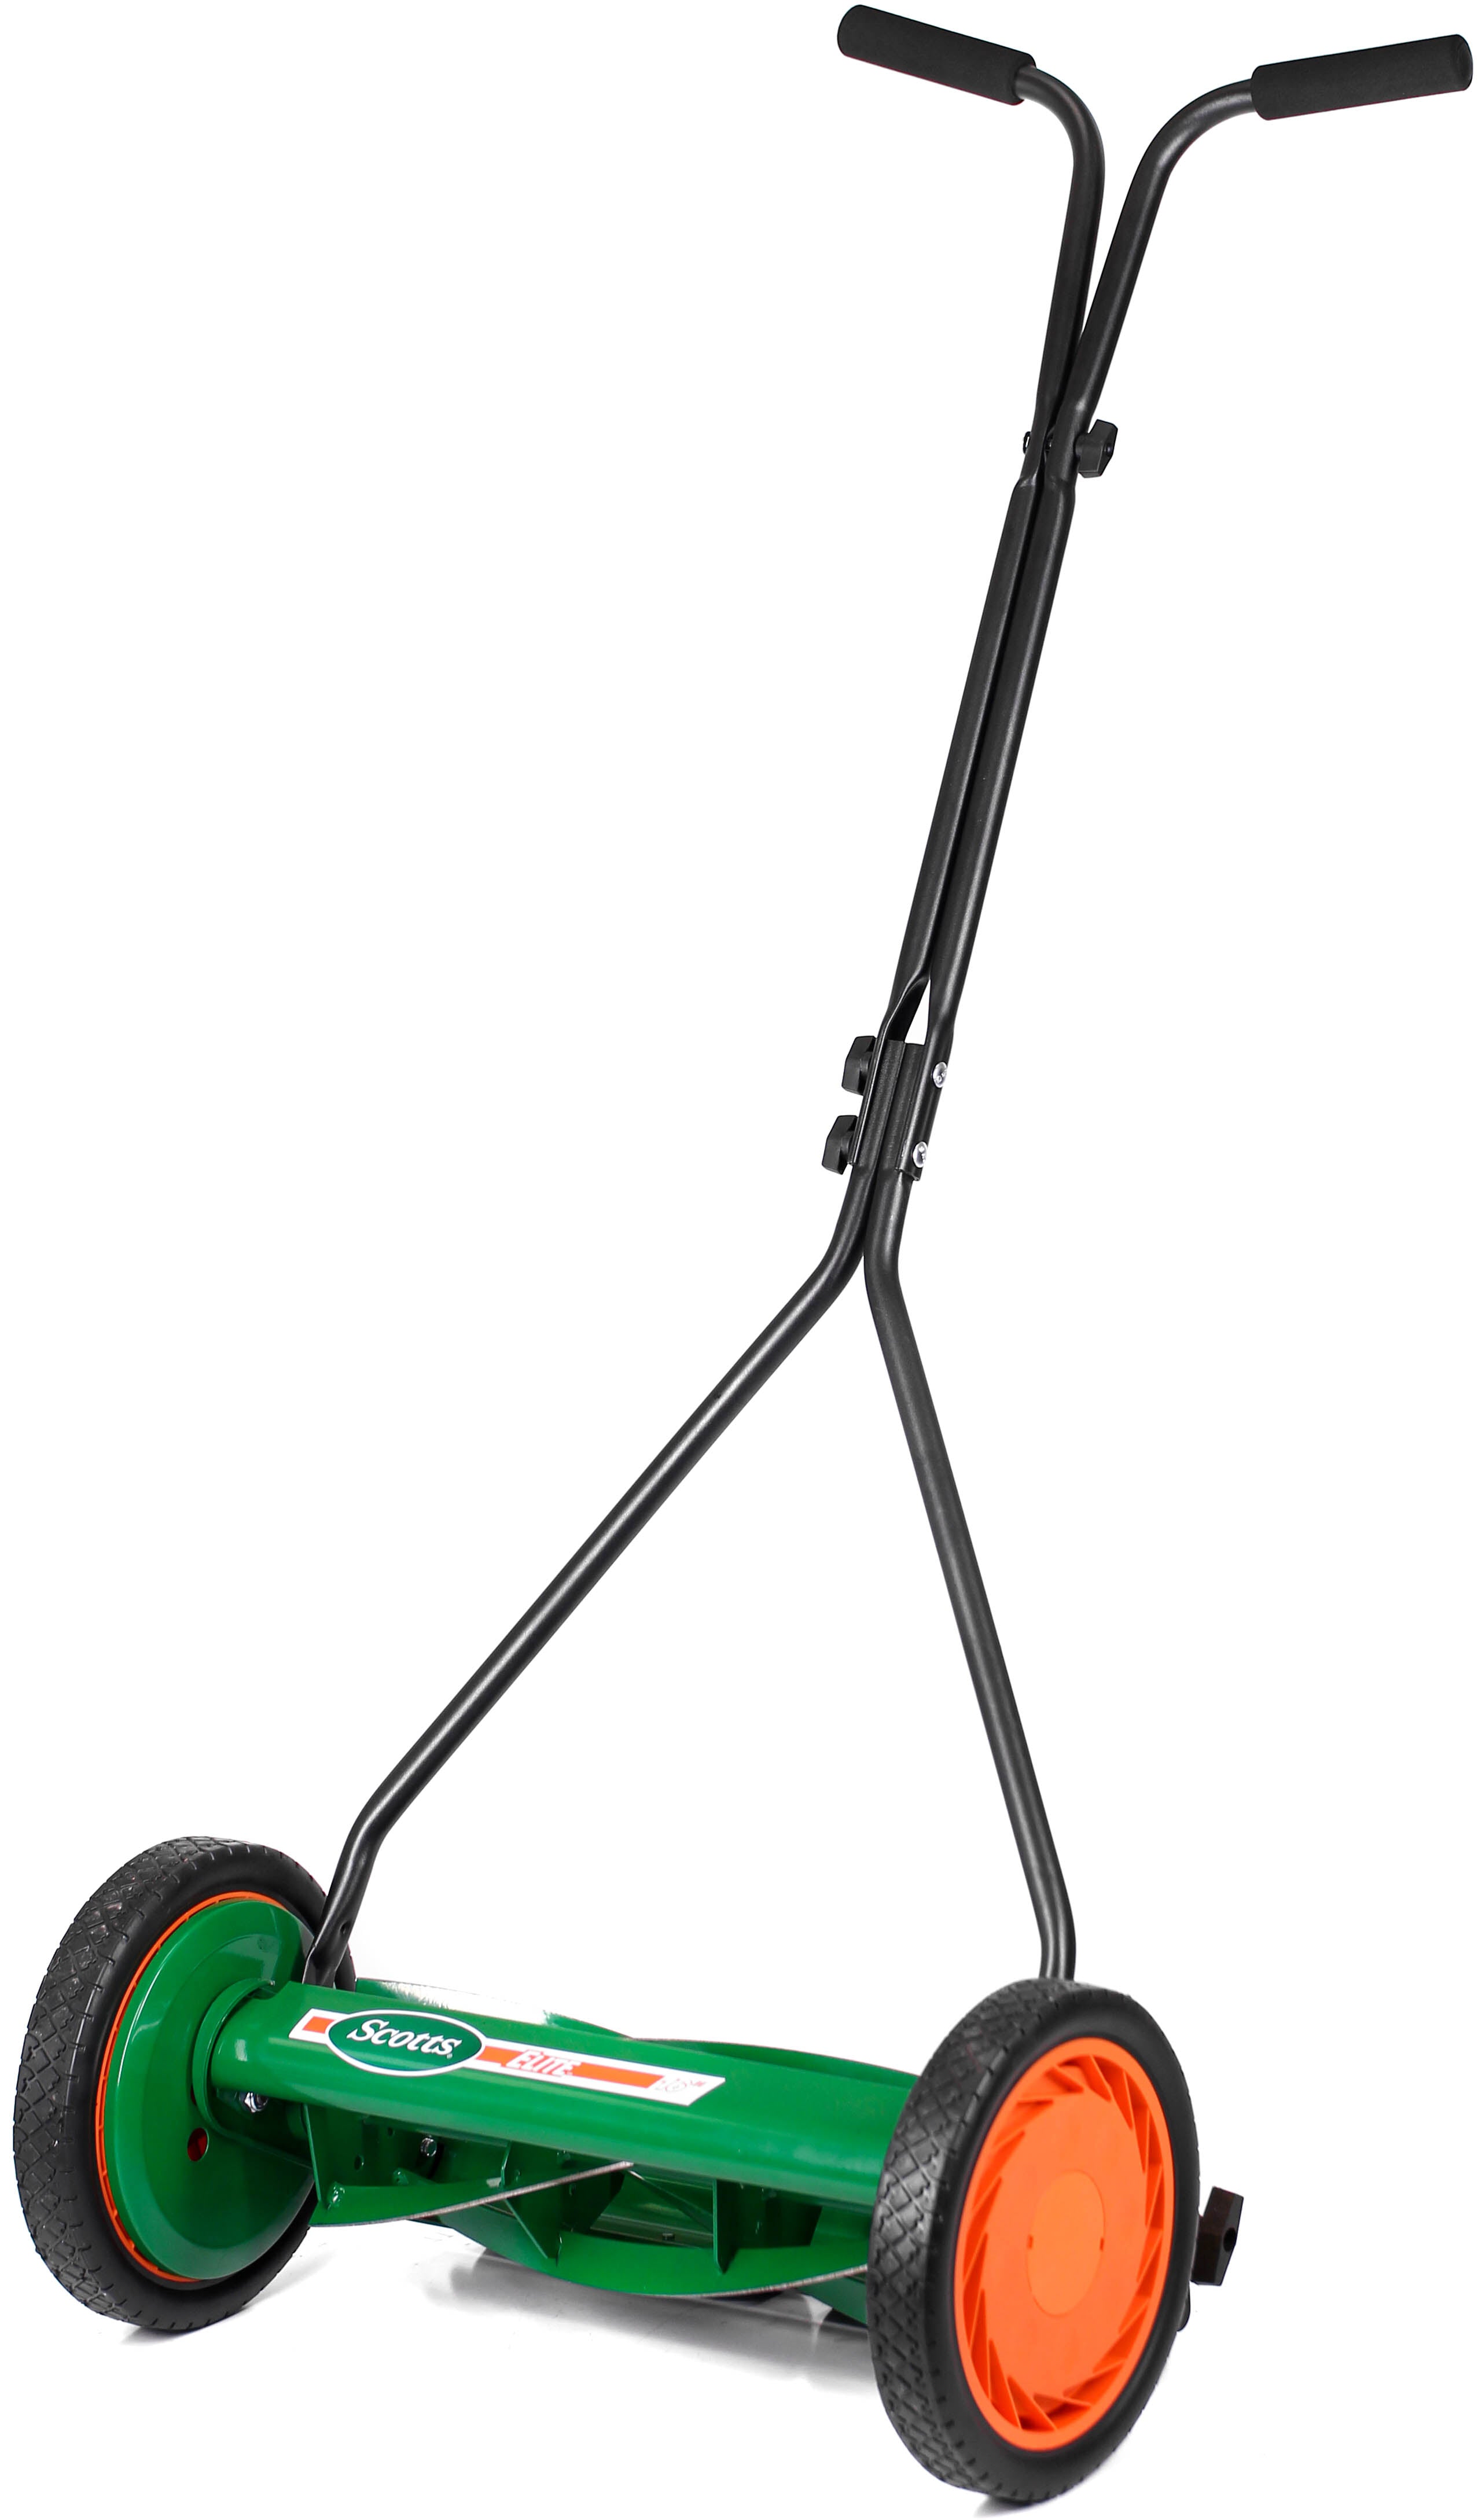 Scotts 16 Manual Reel Mower – American Lawn Mower Co. EST 1895